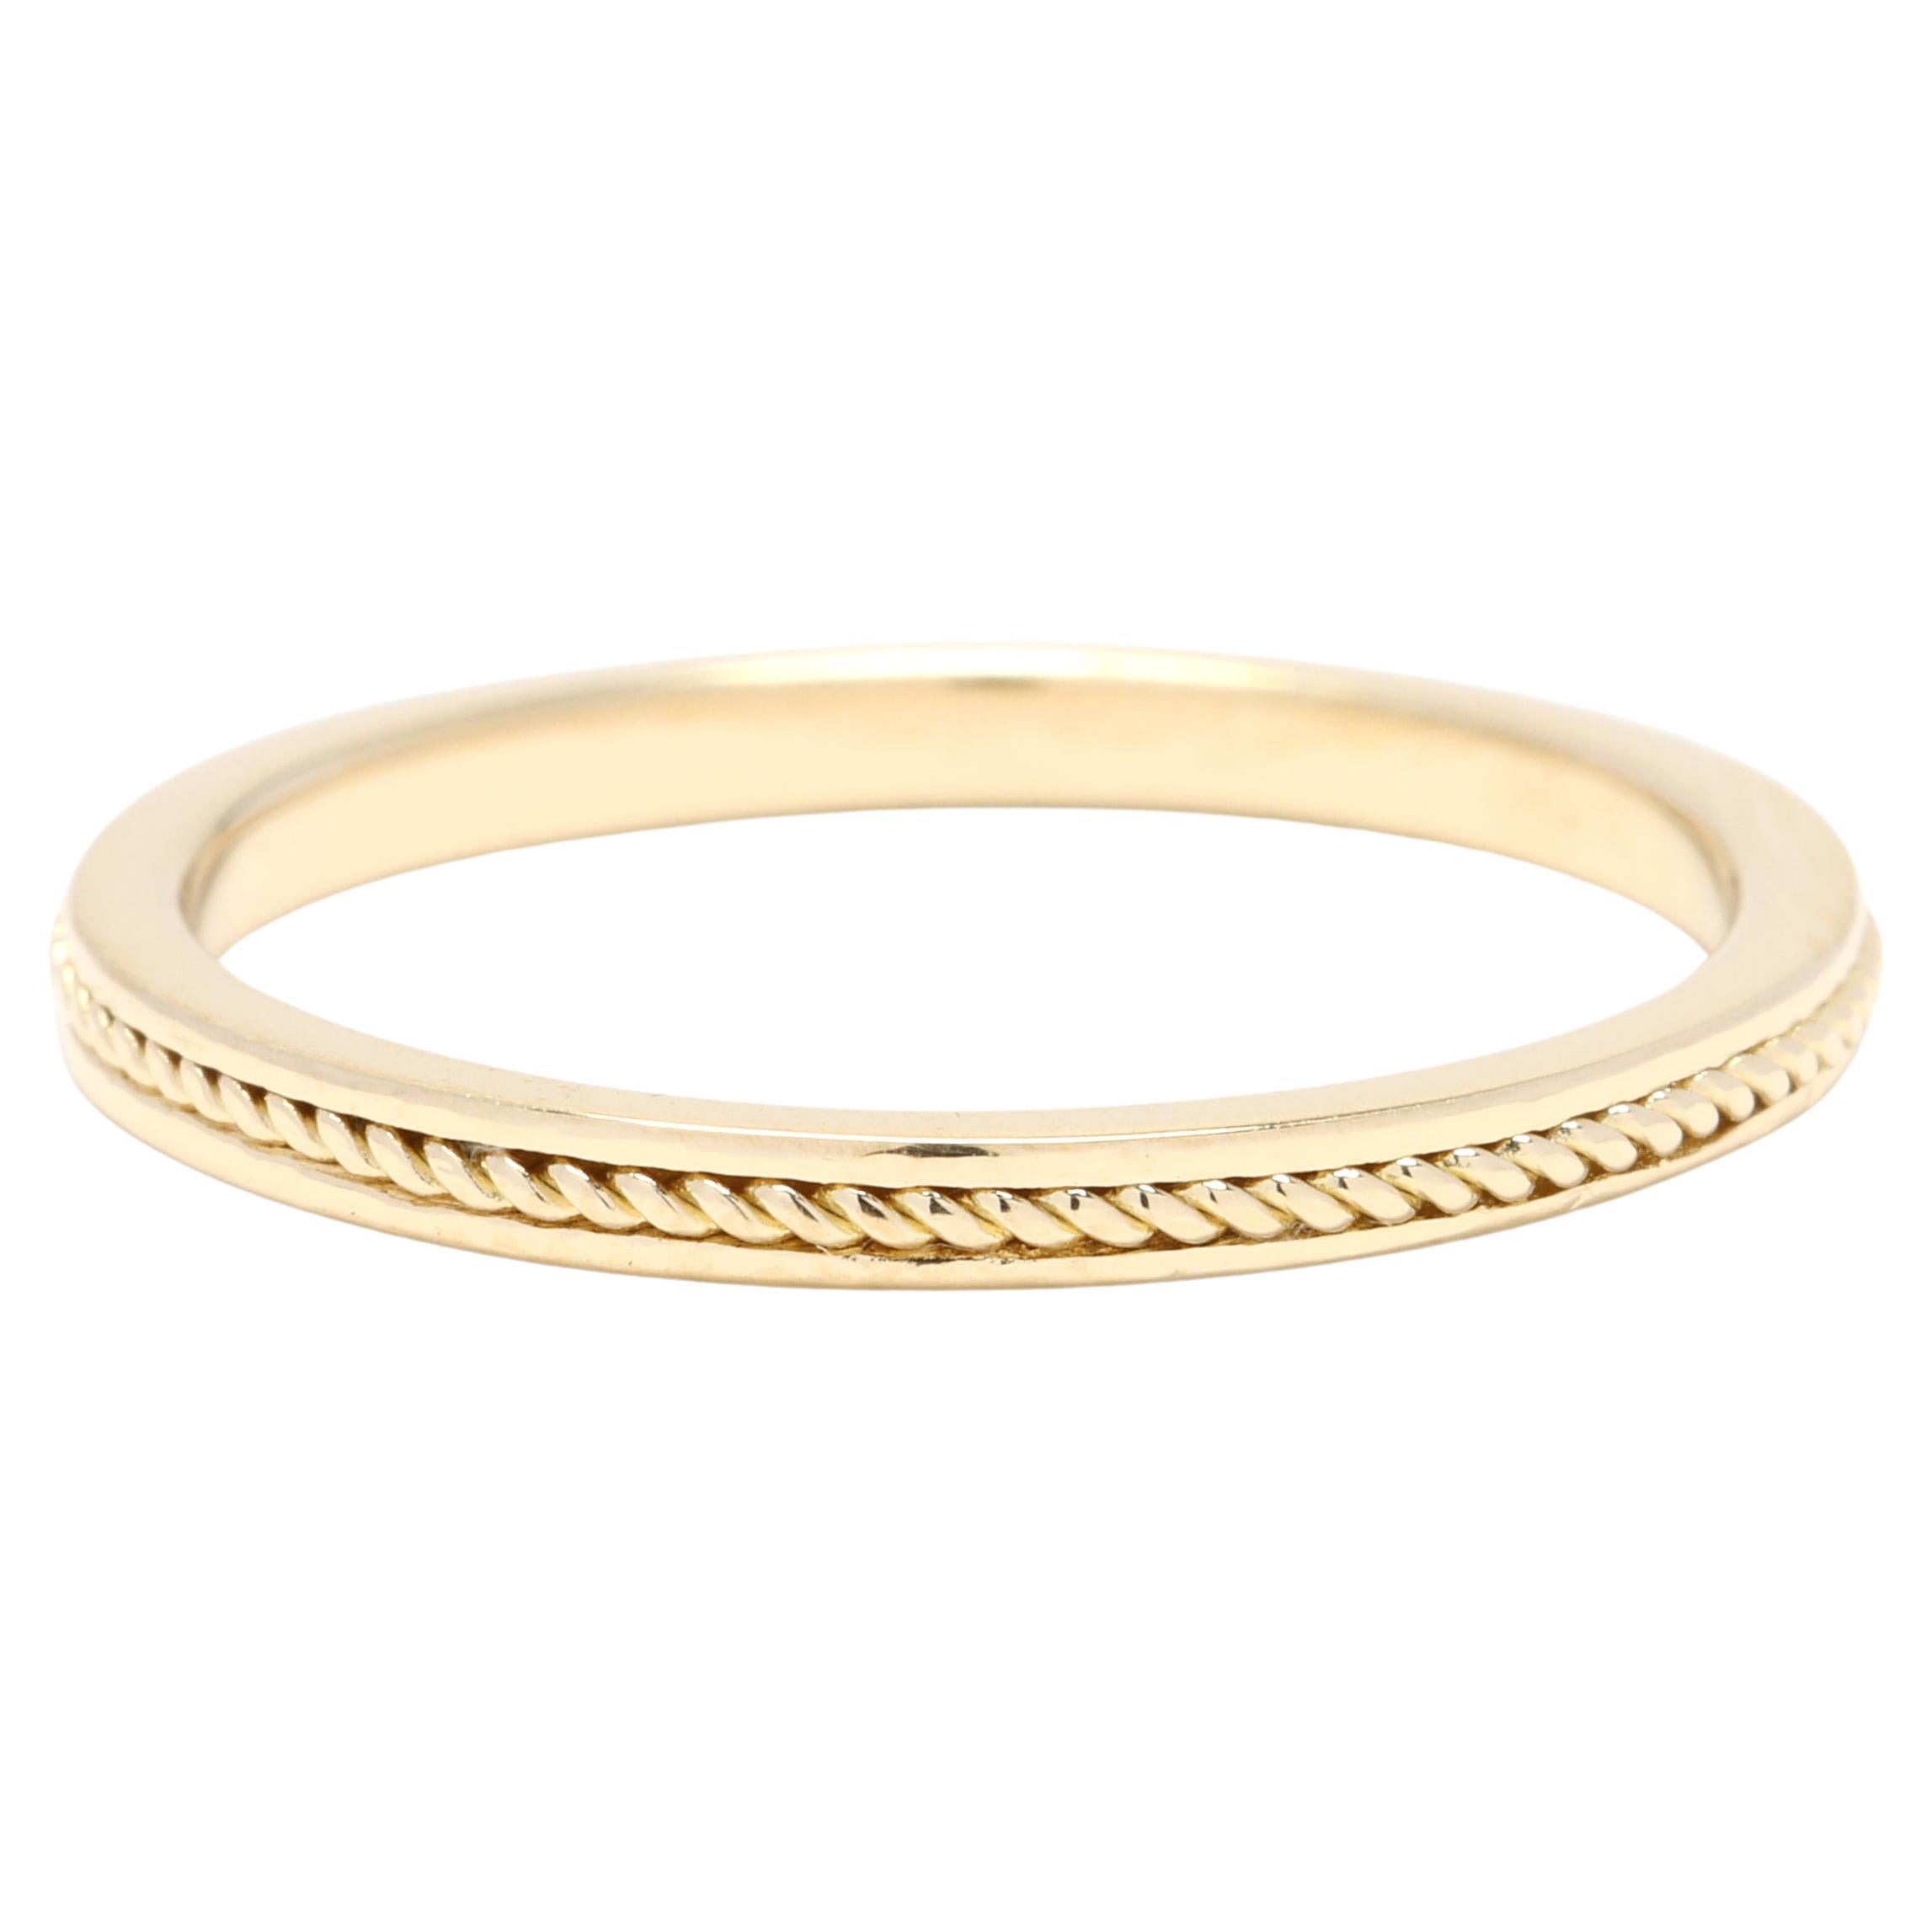 Hidalgo Gold Band Ring, 18k Yellow Gold, Ring Size 5.75, Rope Band Ring